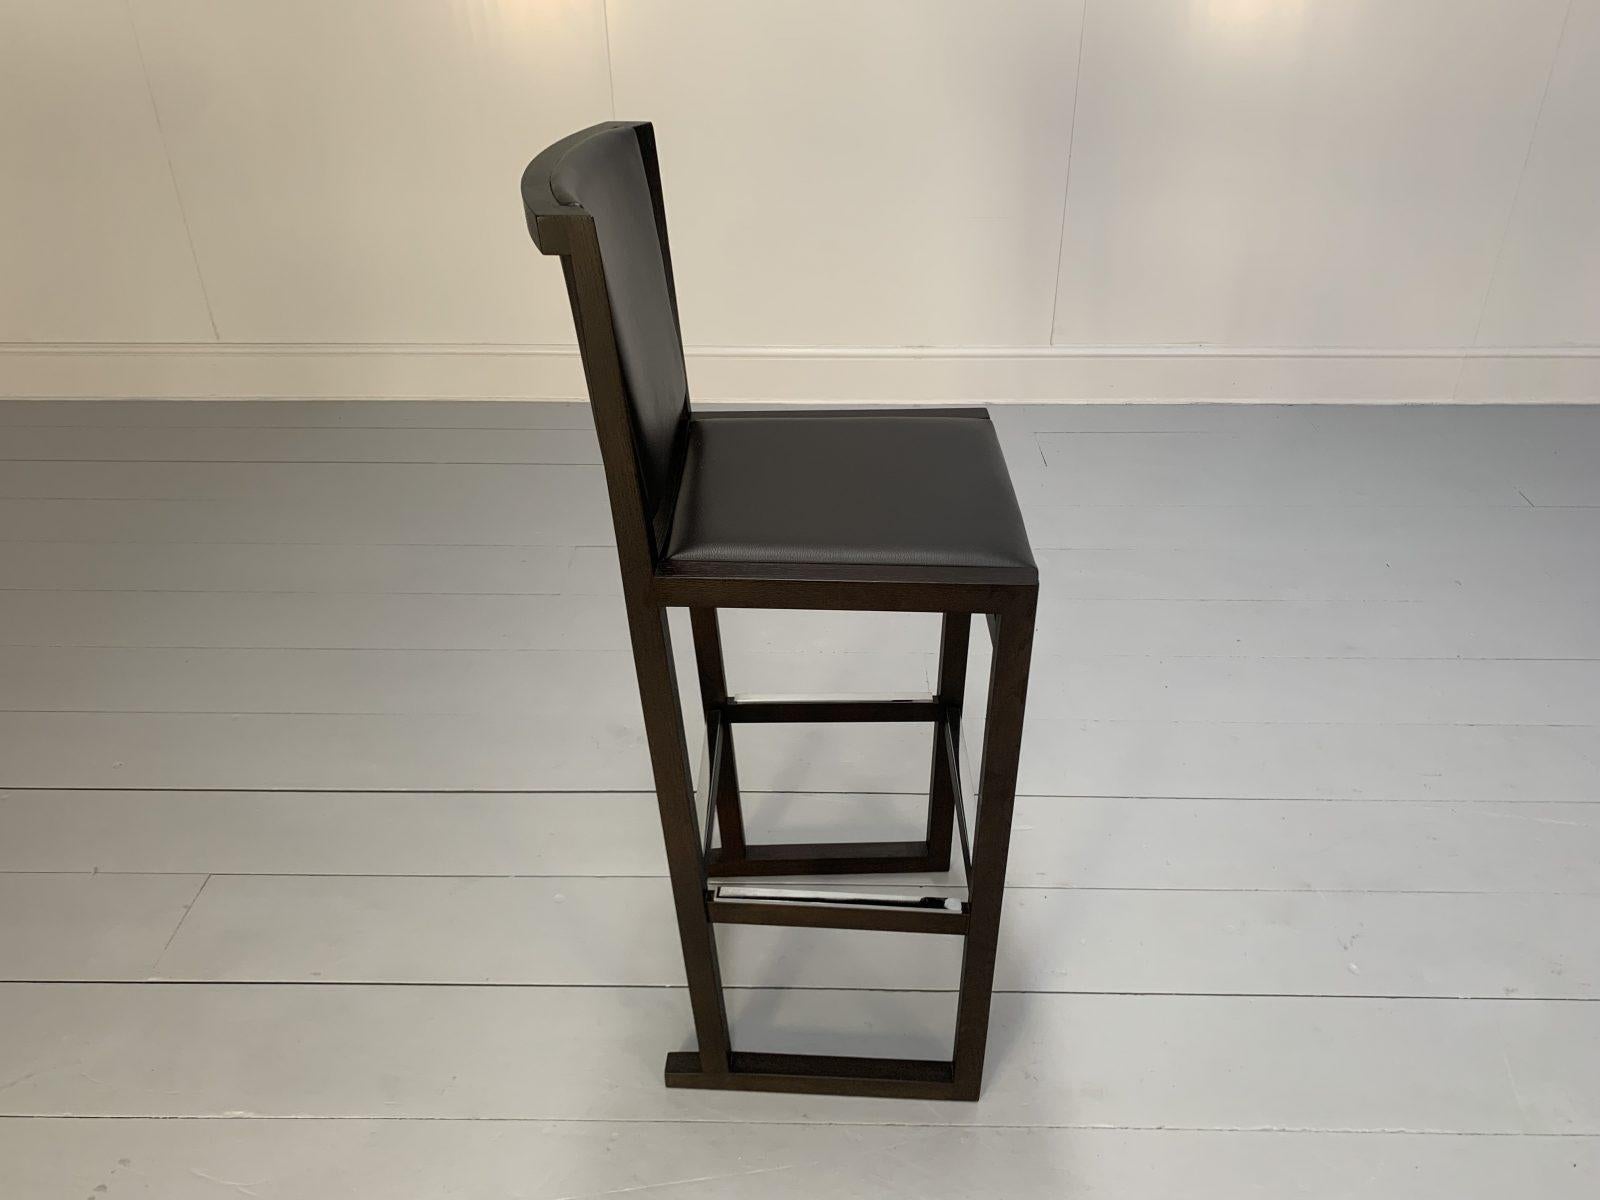 Pair of B&B Italia “Musa SM46G” Tall Bar Stool Chairs – In Dark Grey “Kasia” Lea For Sale 6